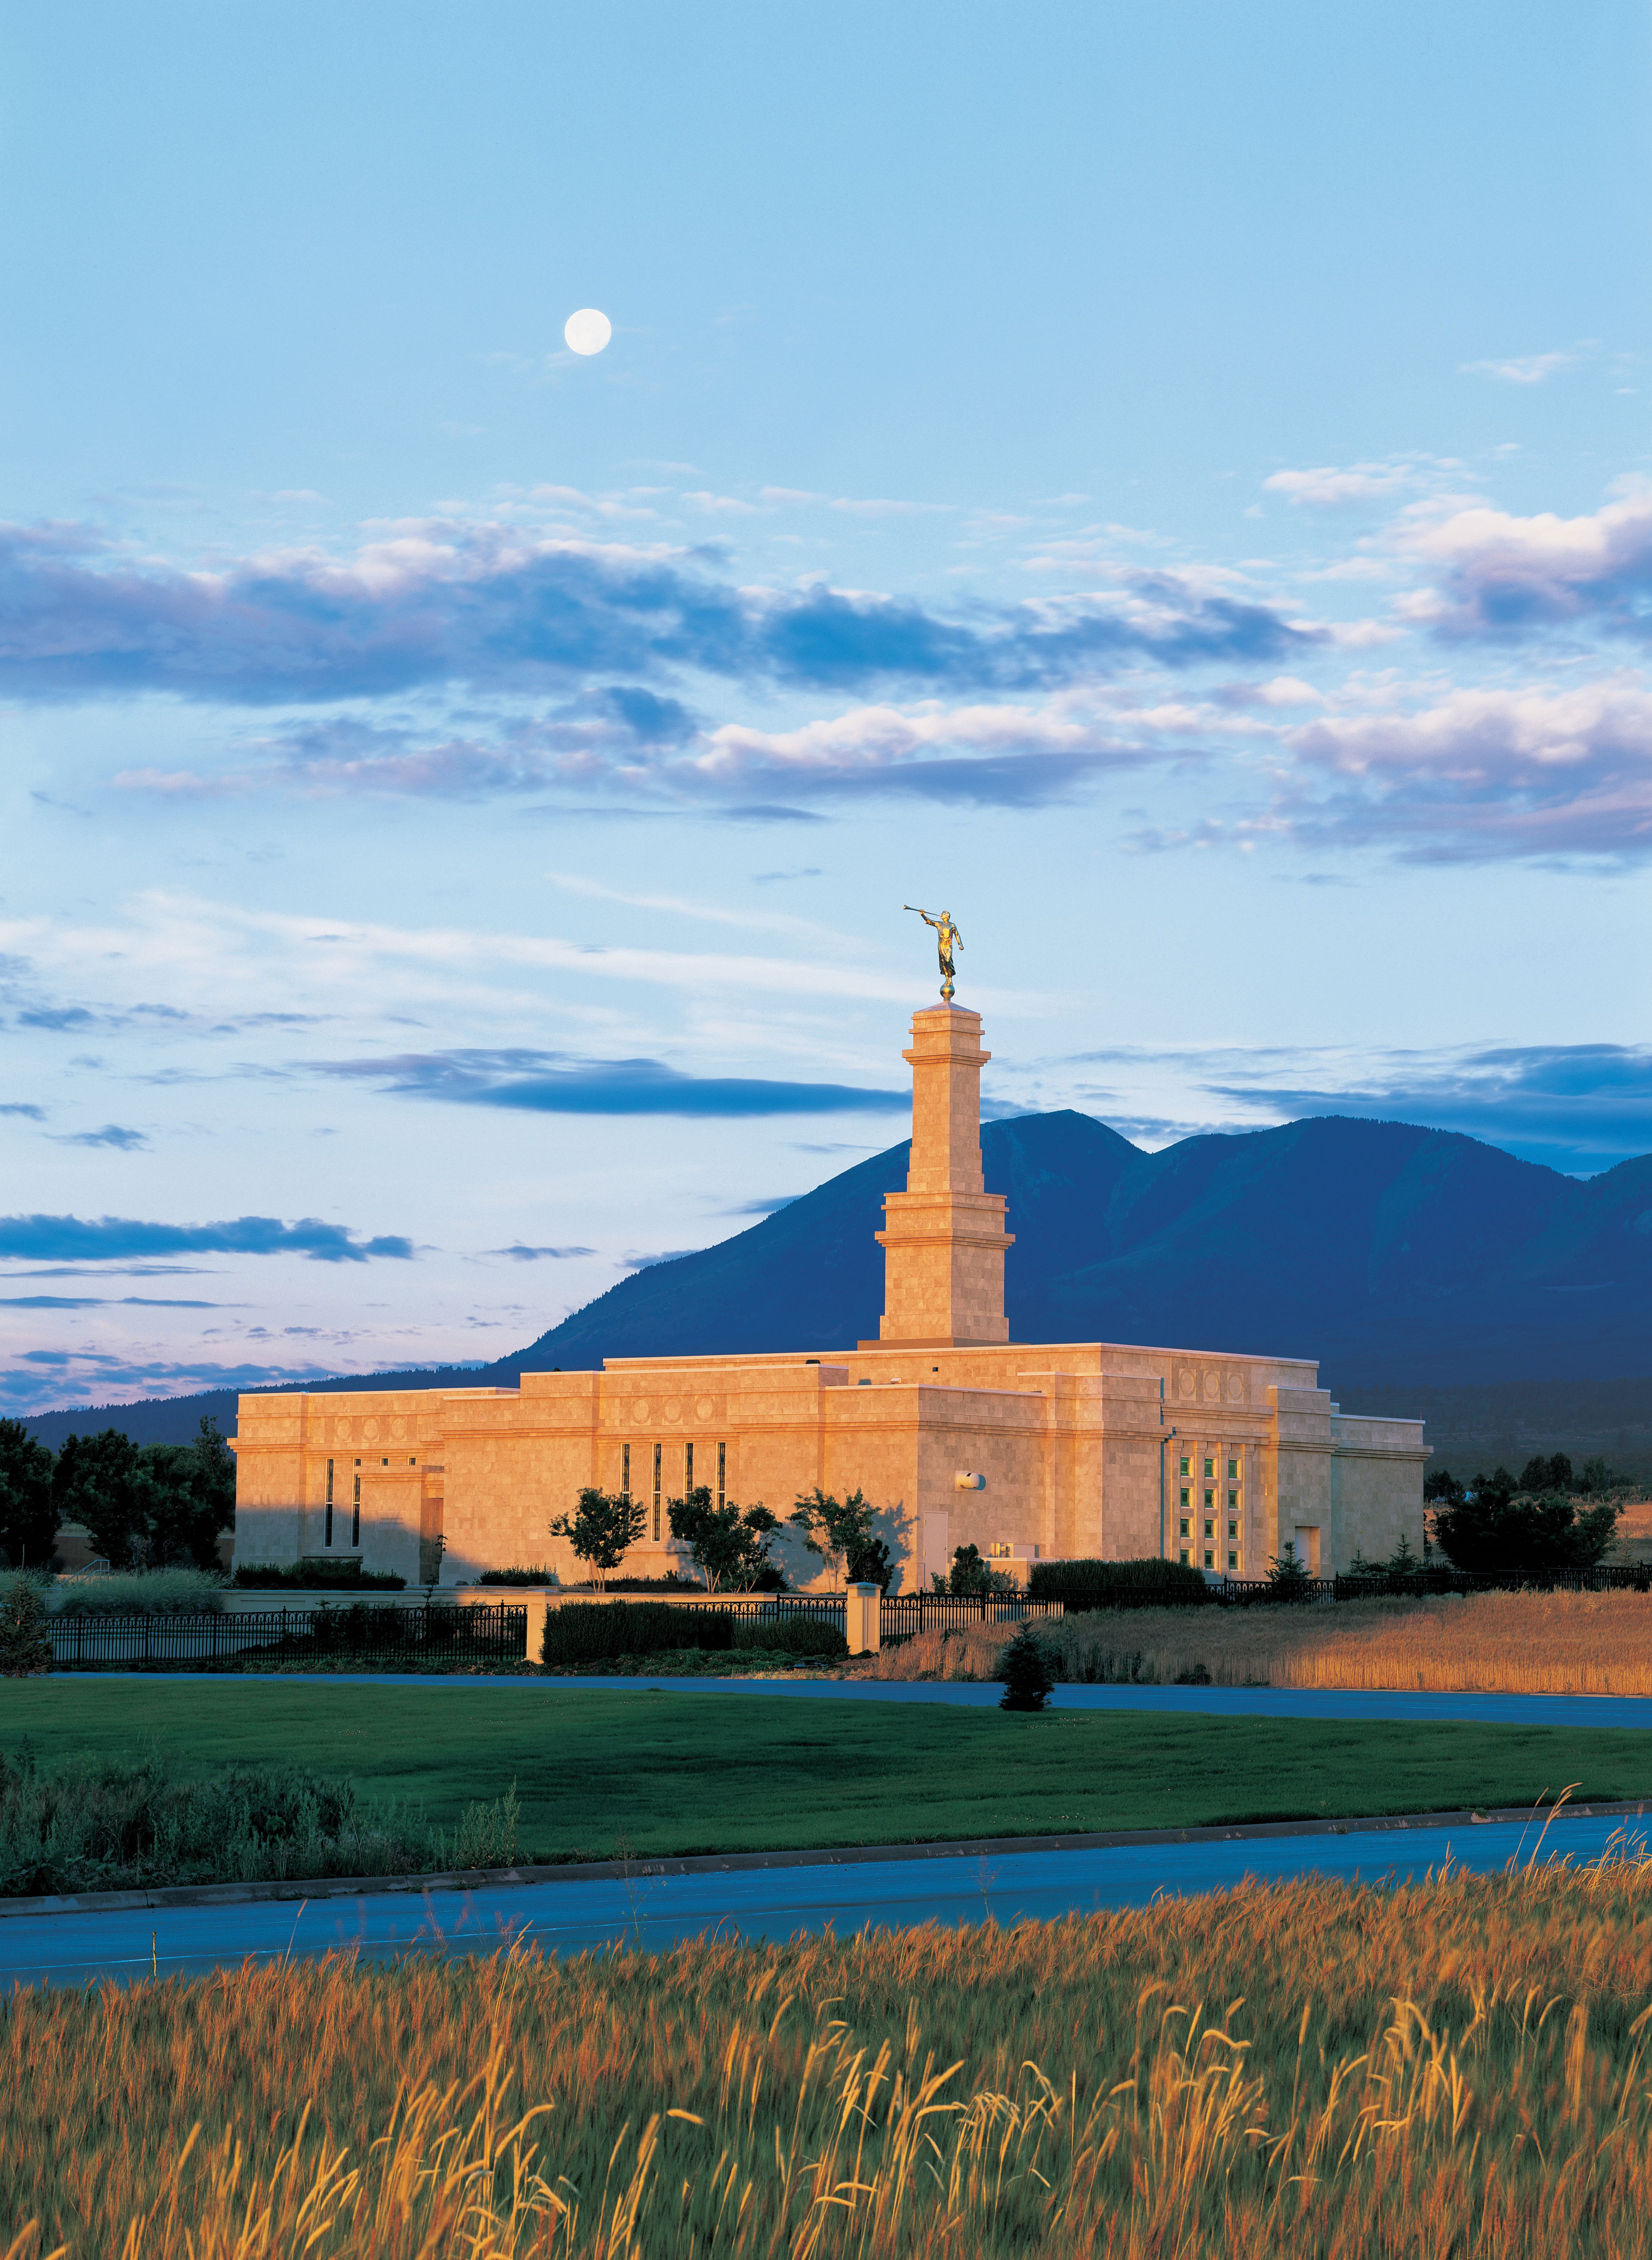 The Monticello Utah Temple in the evening.